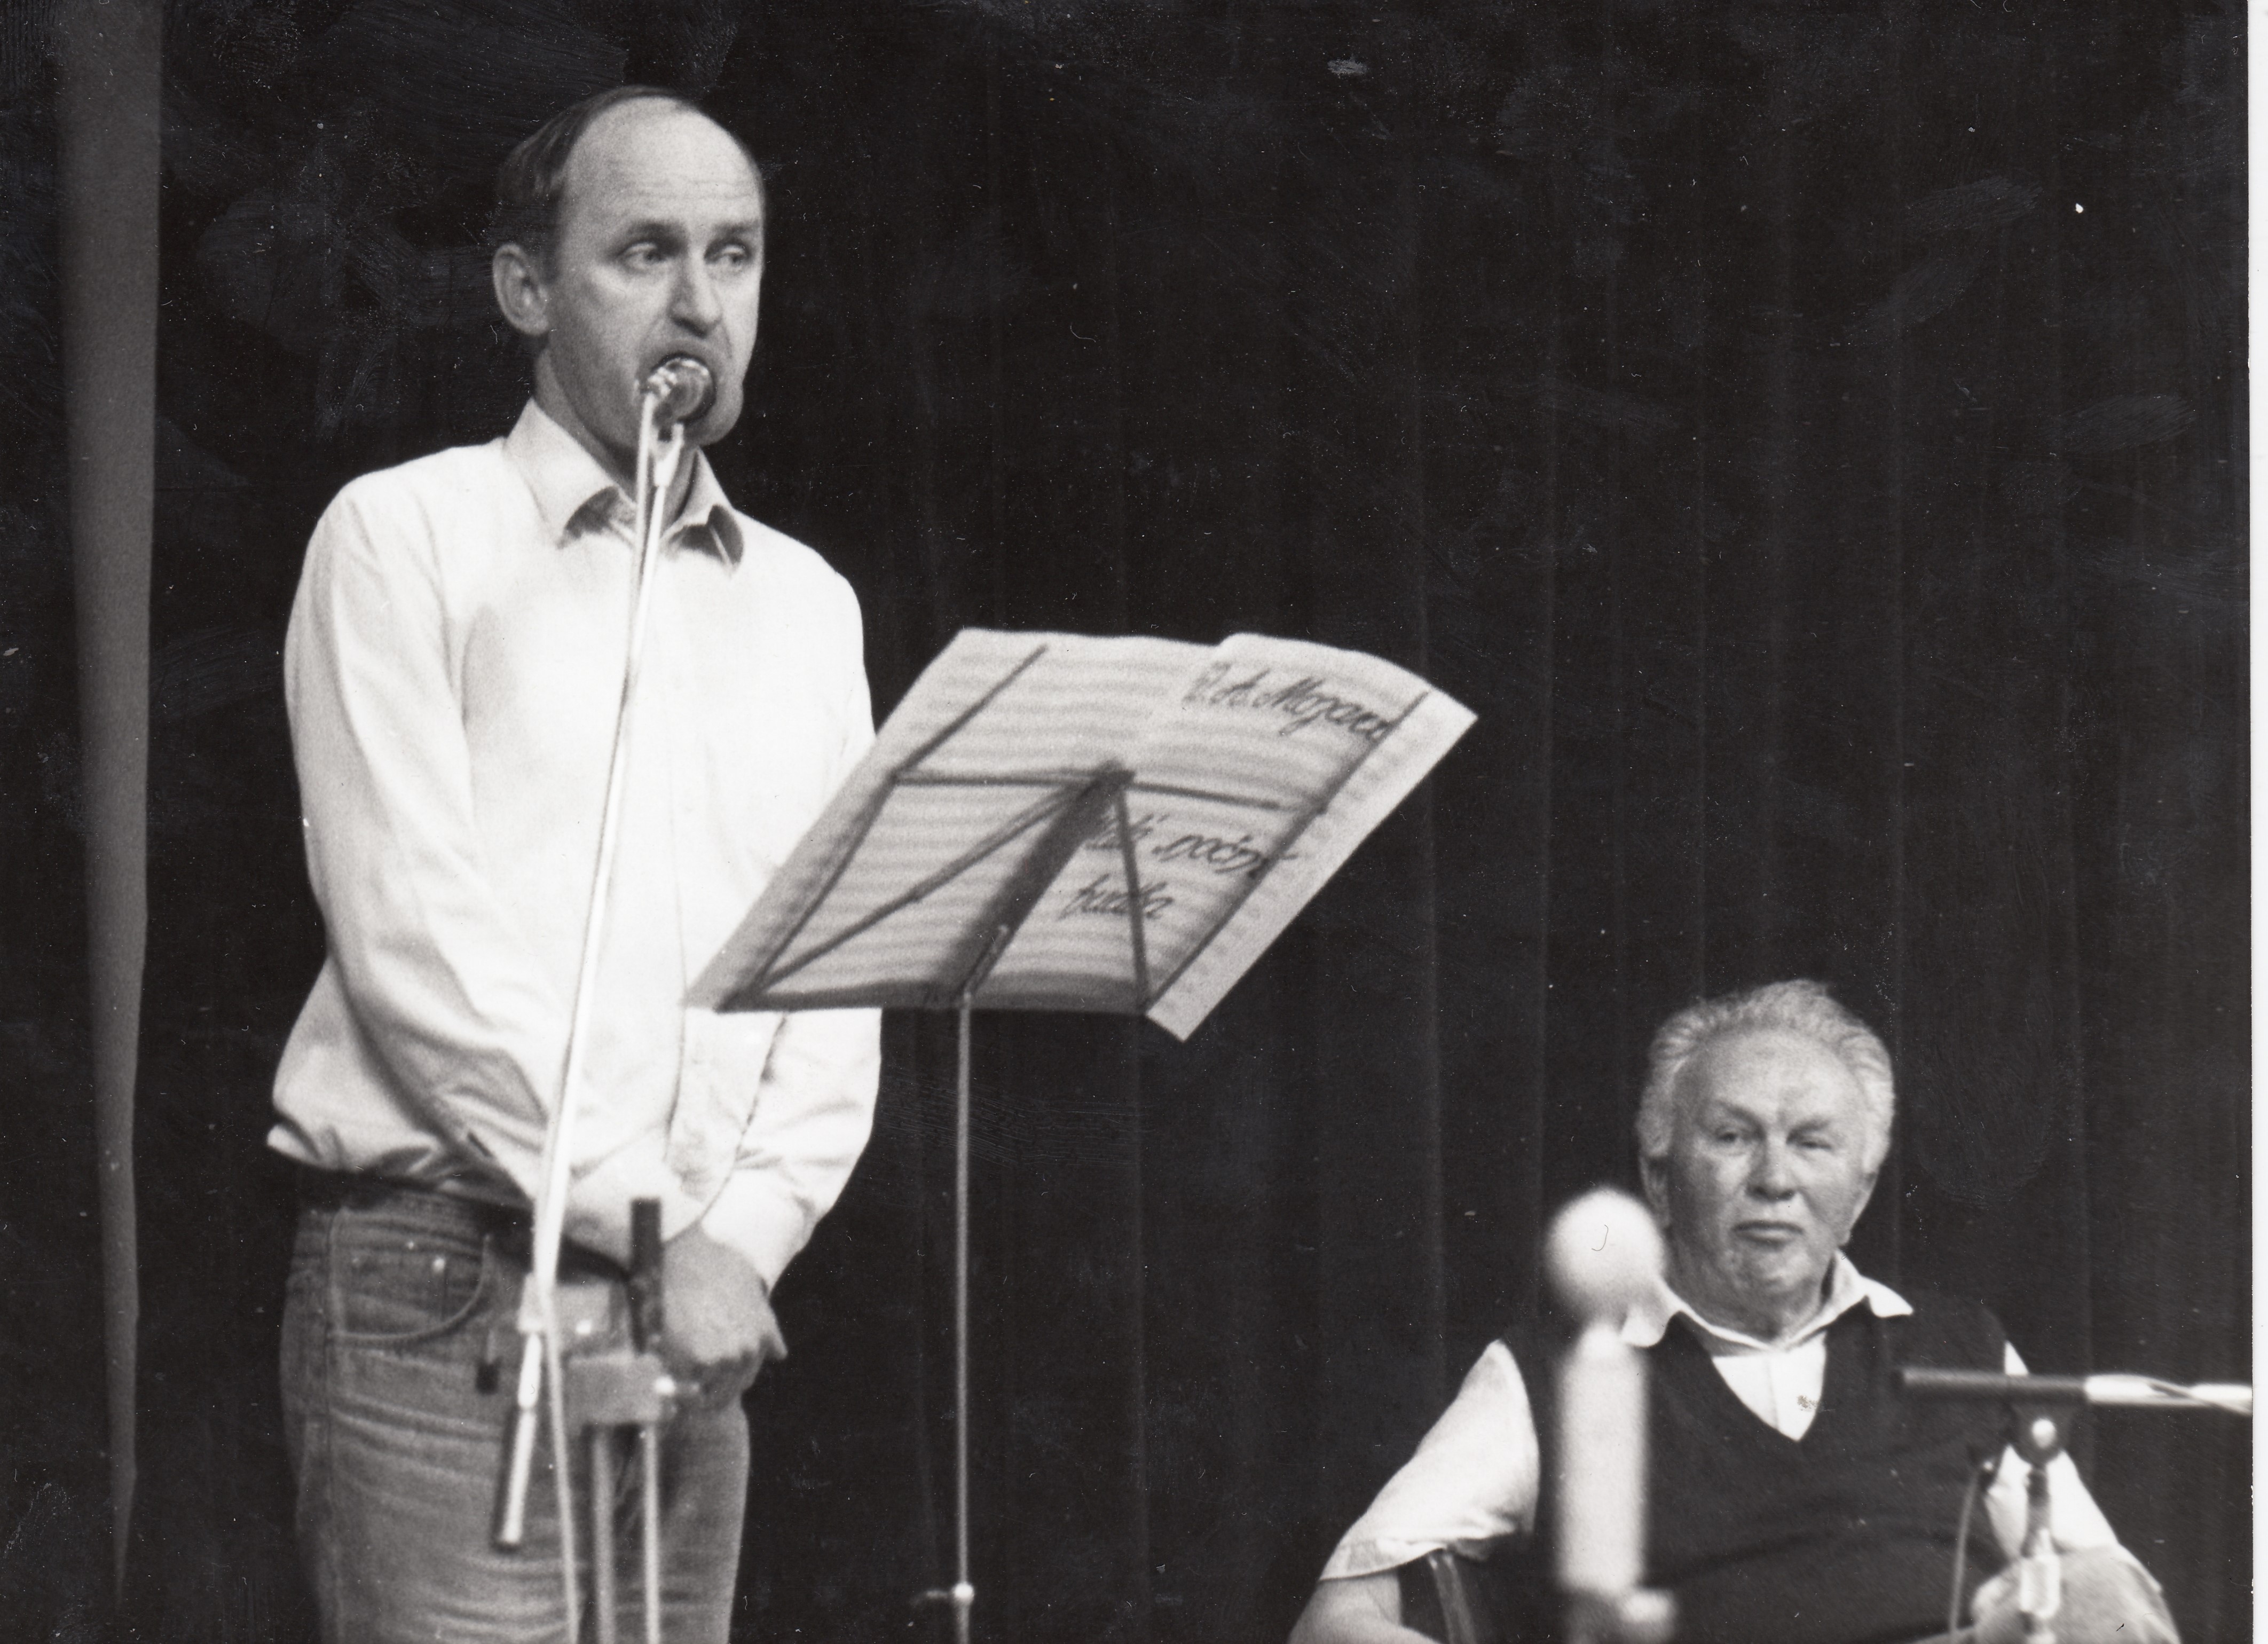 Josef Bajer a Zdeněk Mahler, 80. léta